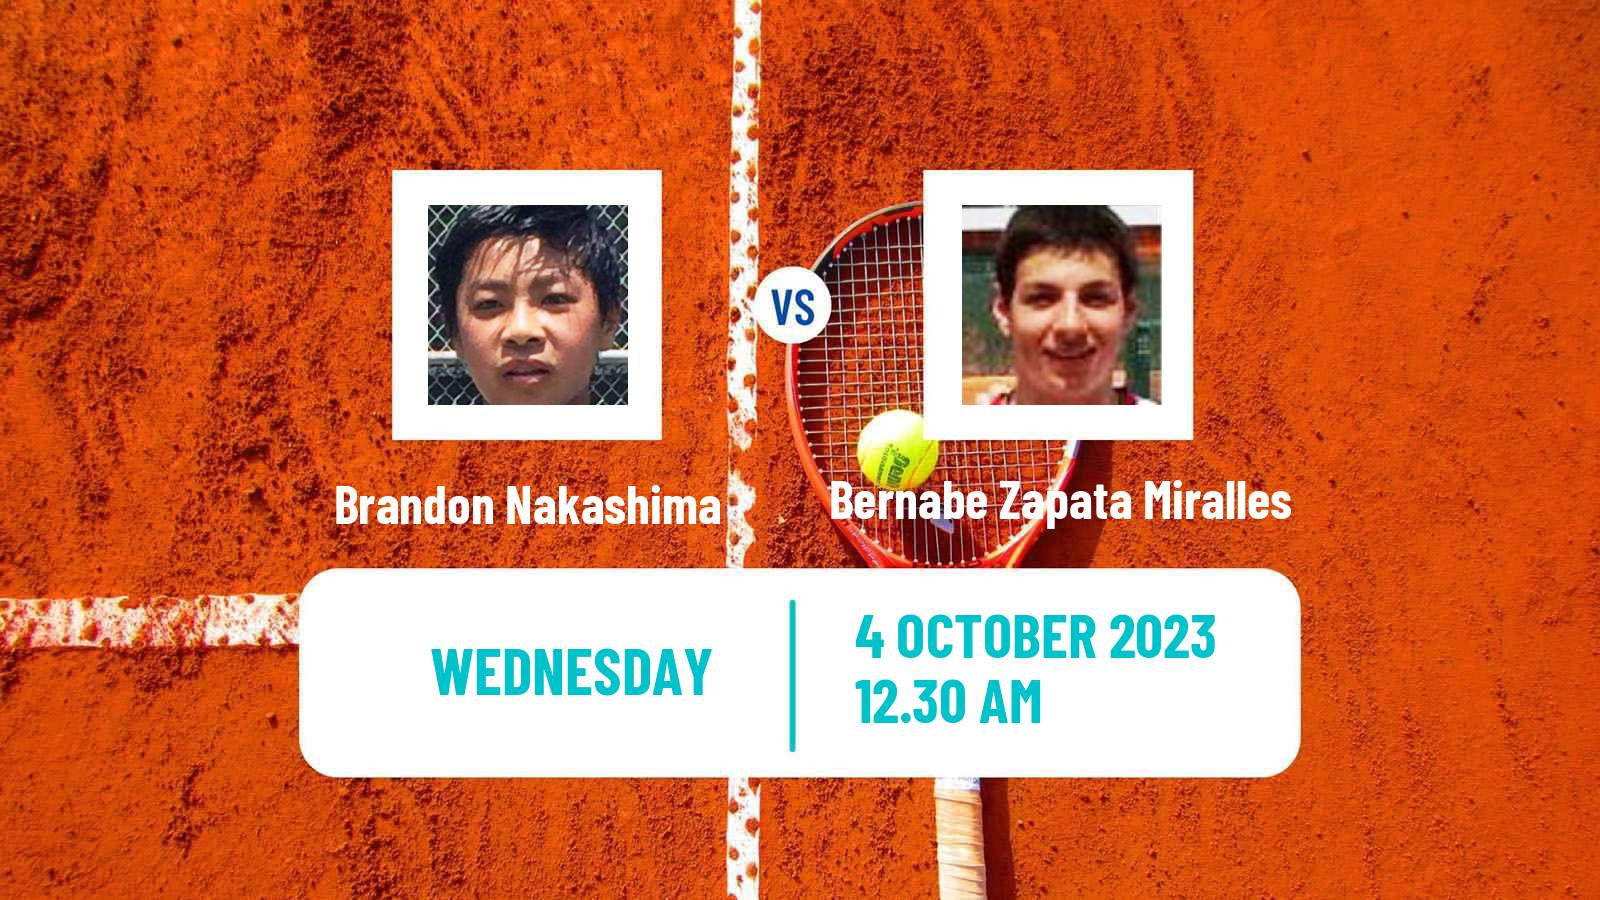 Tennis ATP Shanghai Brandon Nakashima - Bernabe Zapata Miralles